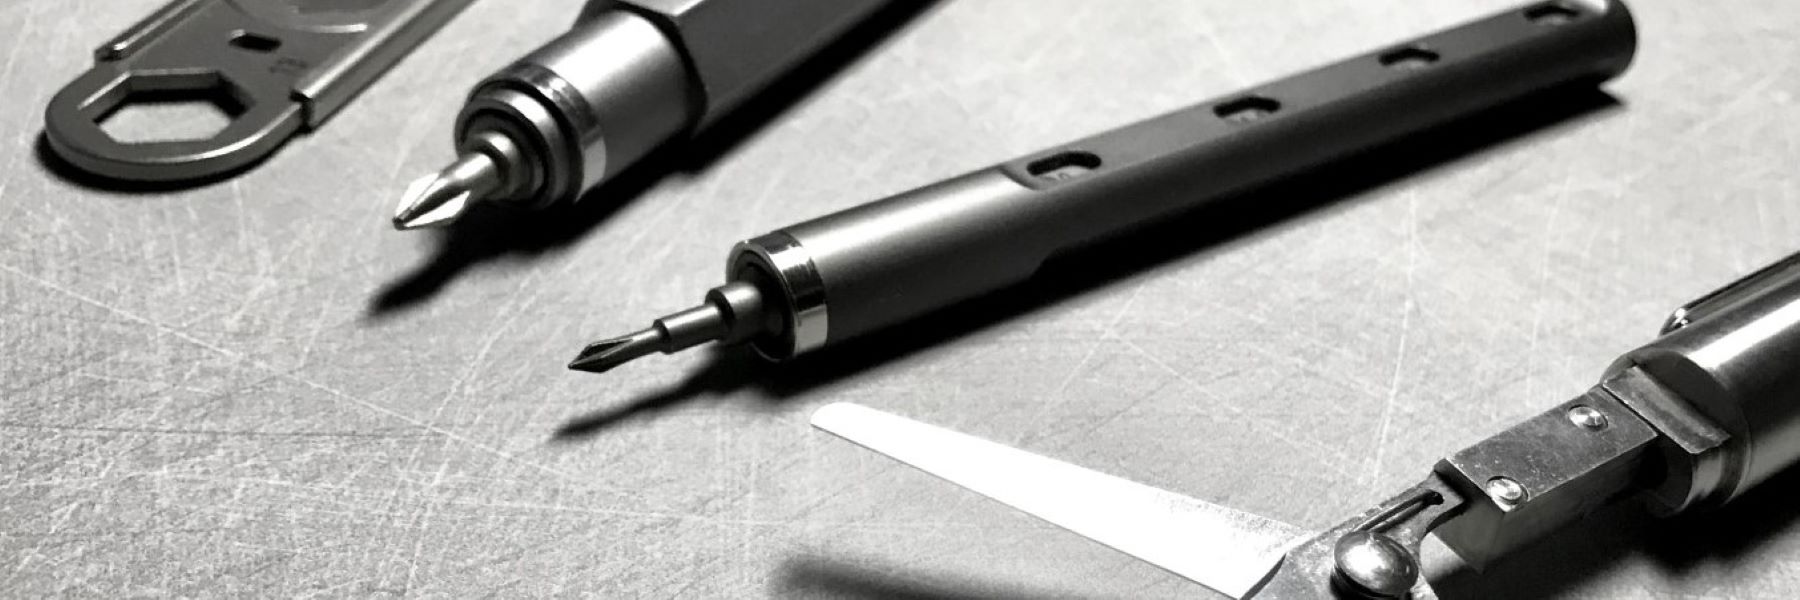 tool pen mini is an elegant multi-purpose instrument